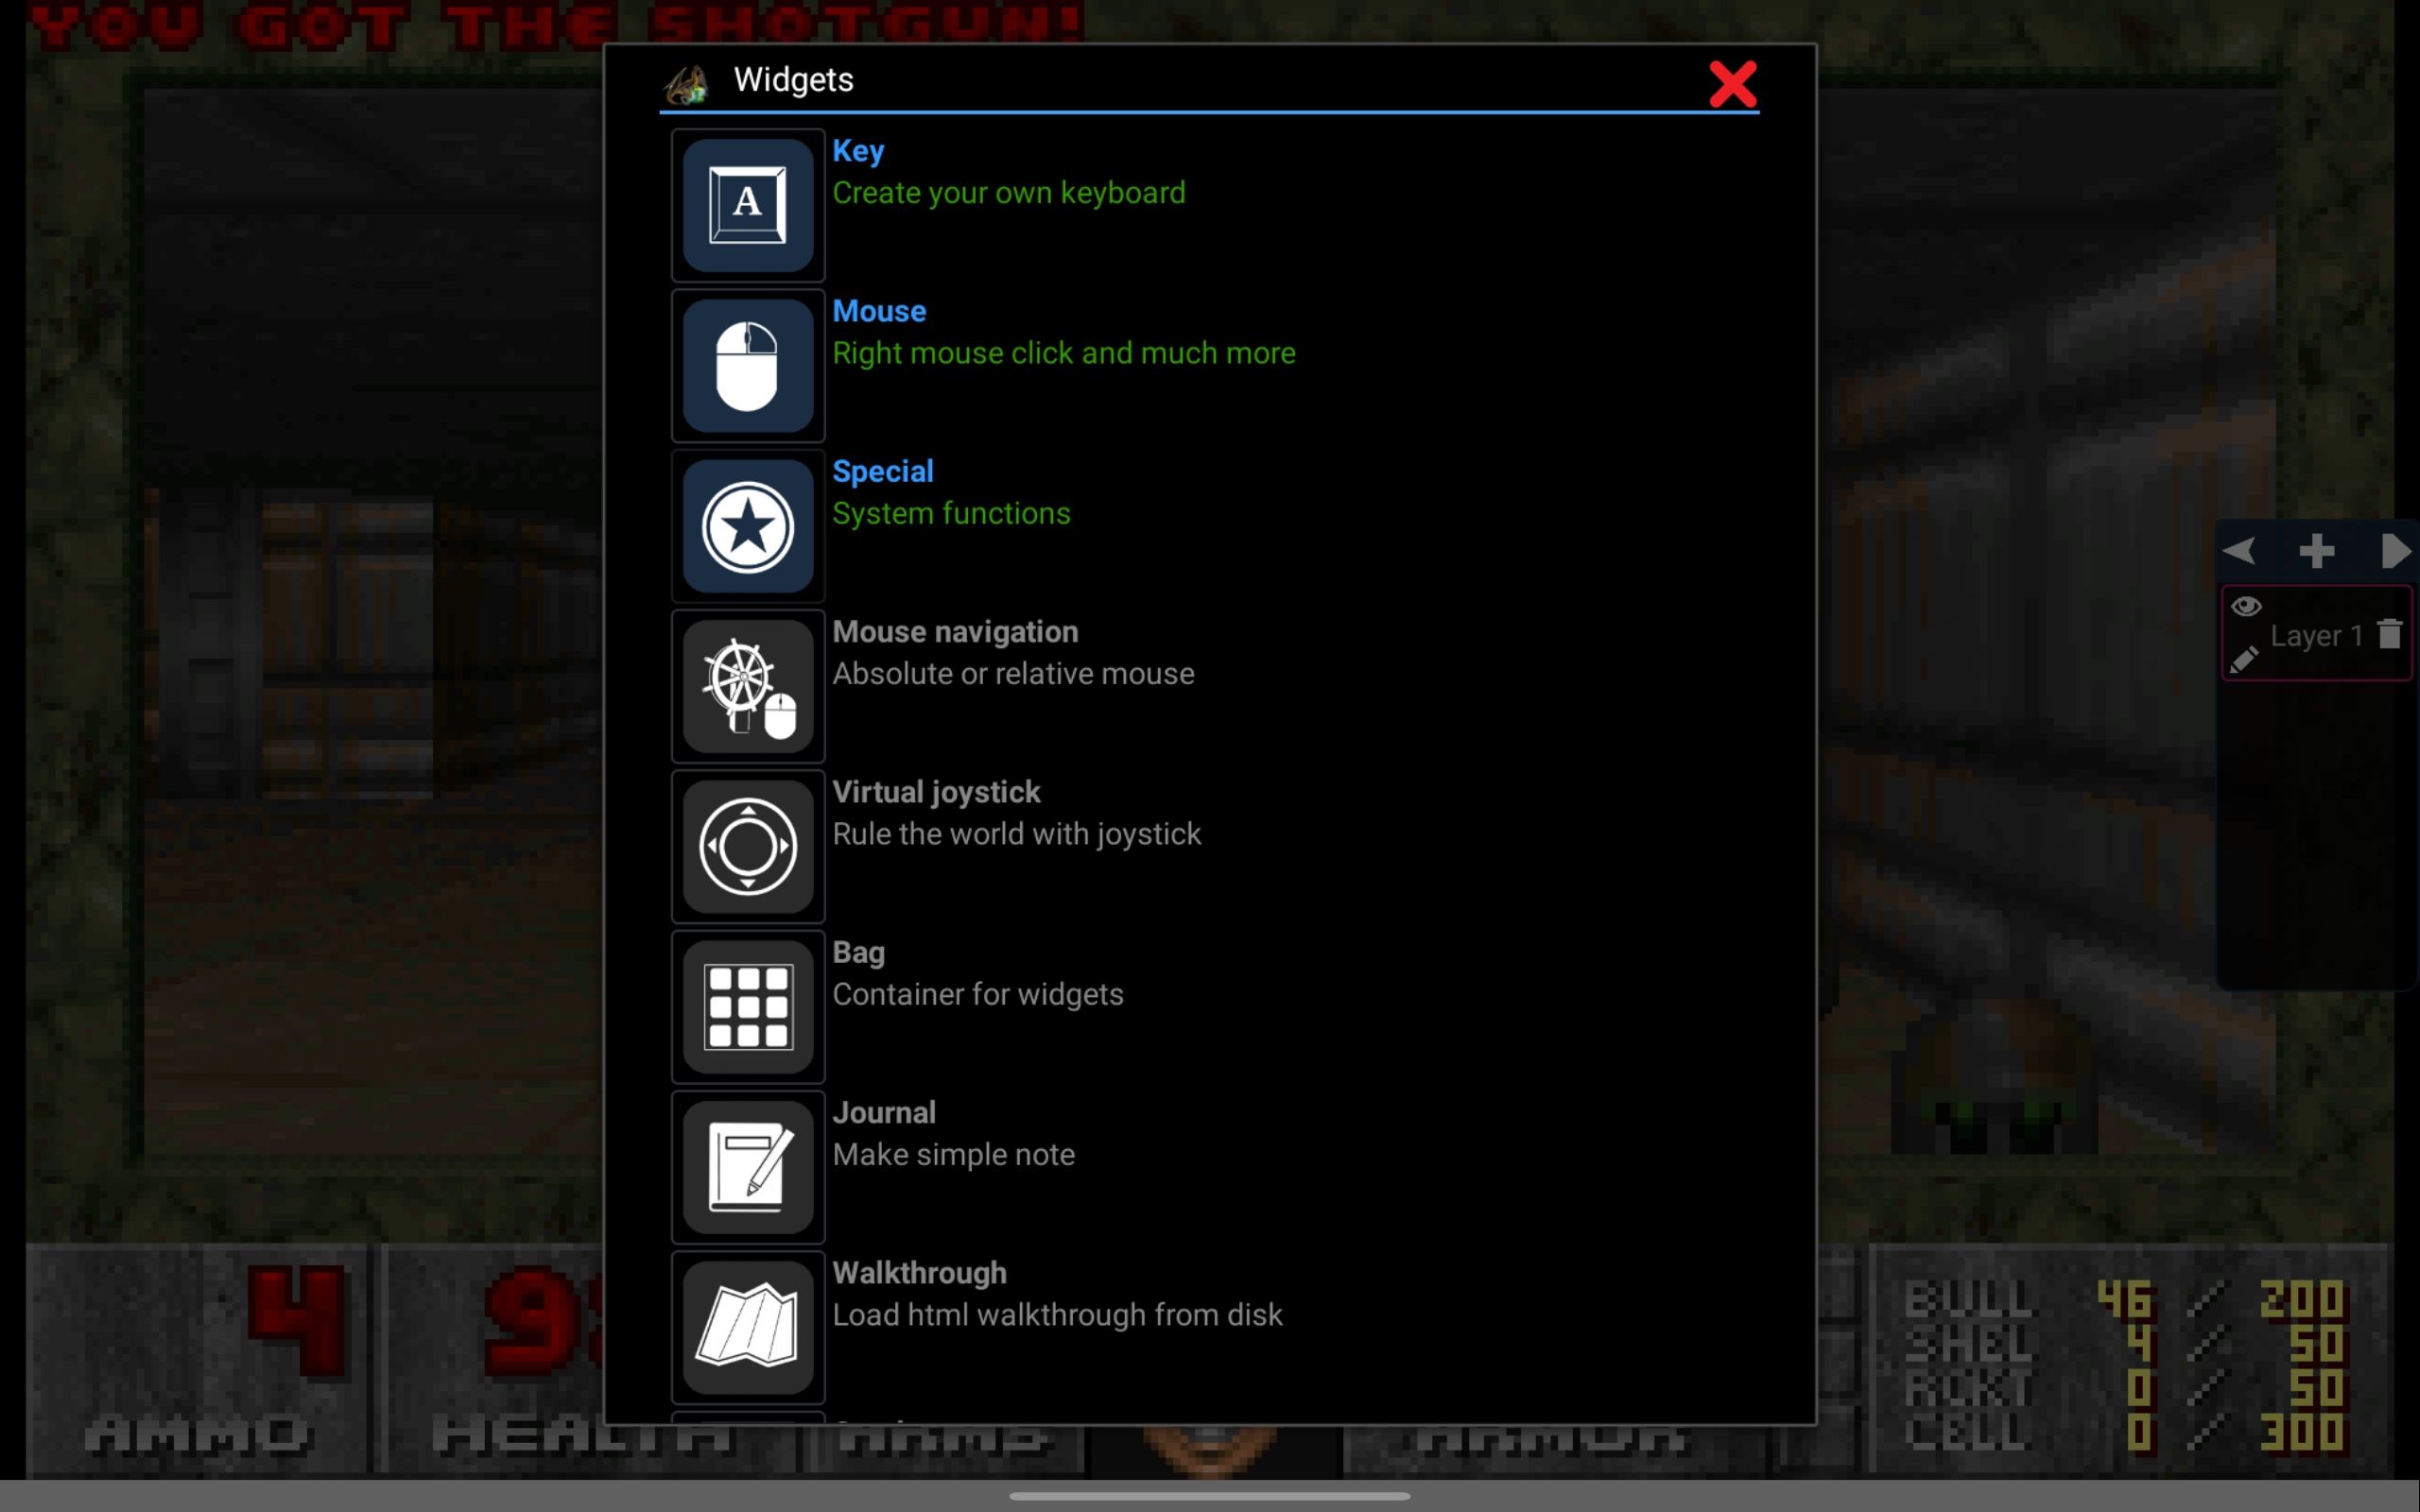 emulator settings window popup in doom game